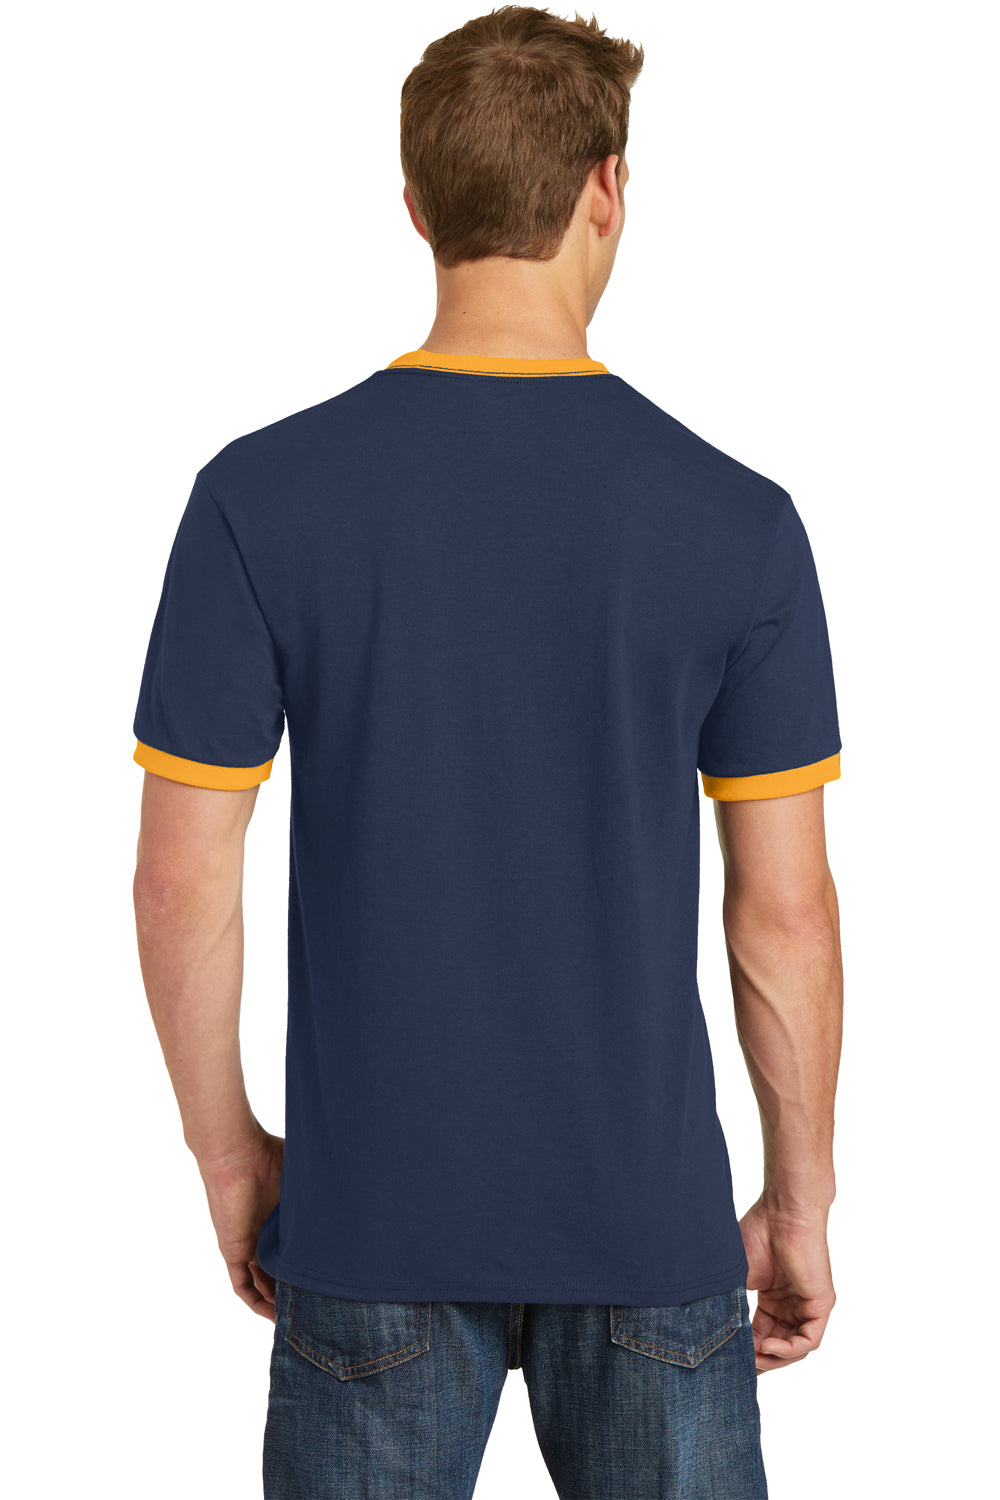 Port & Company PC54R Mens Core Ringer Short Sleeve Crewneck T-Shirt Navy Blue/Gold Back